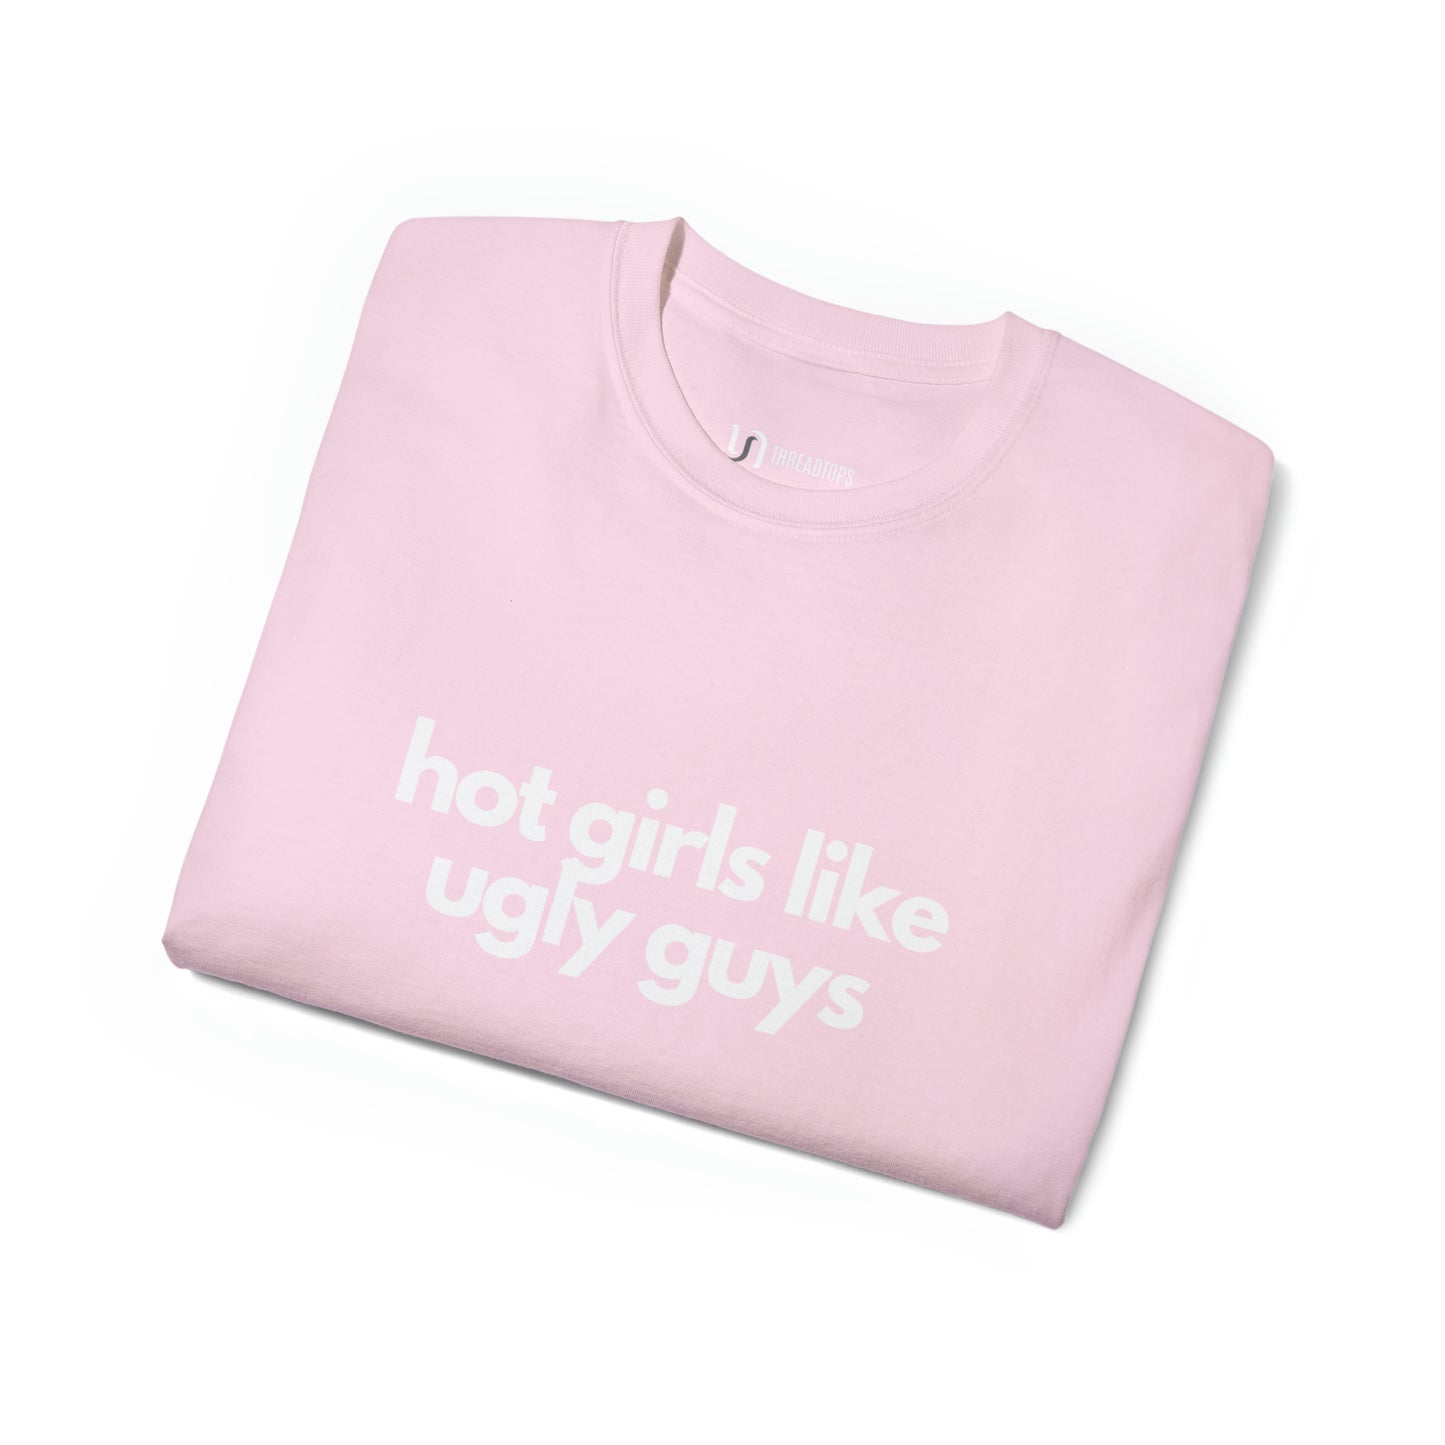 Hot girls like ugly guys | Tee